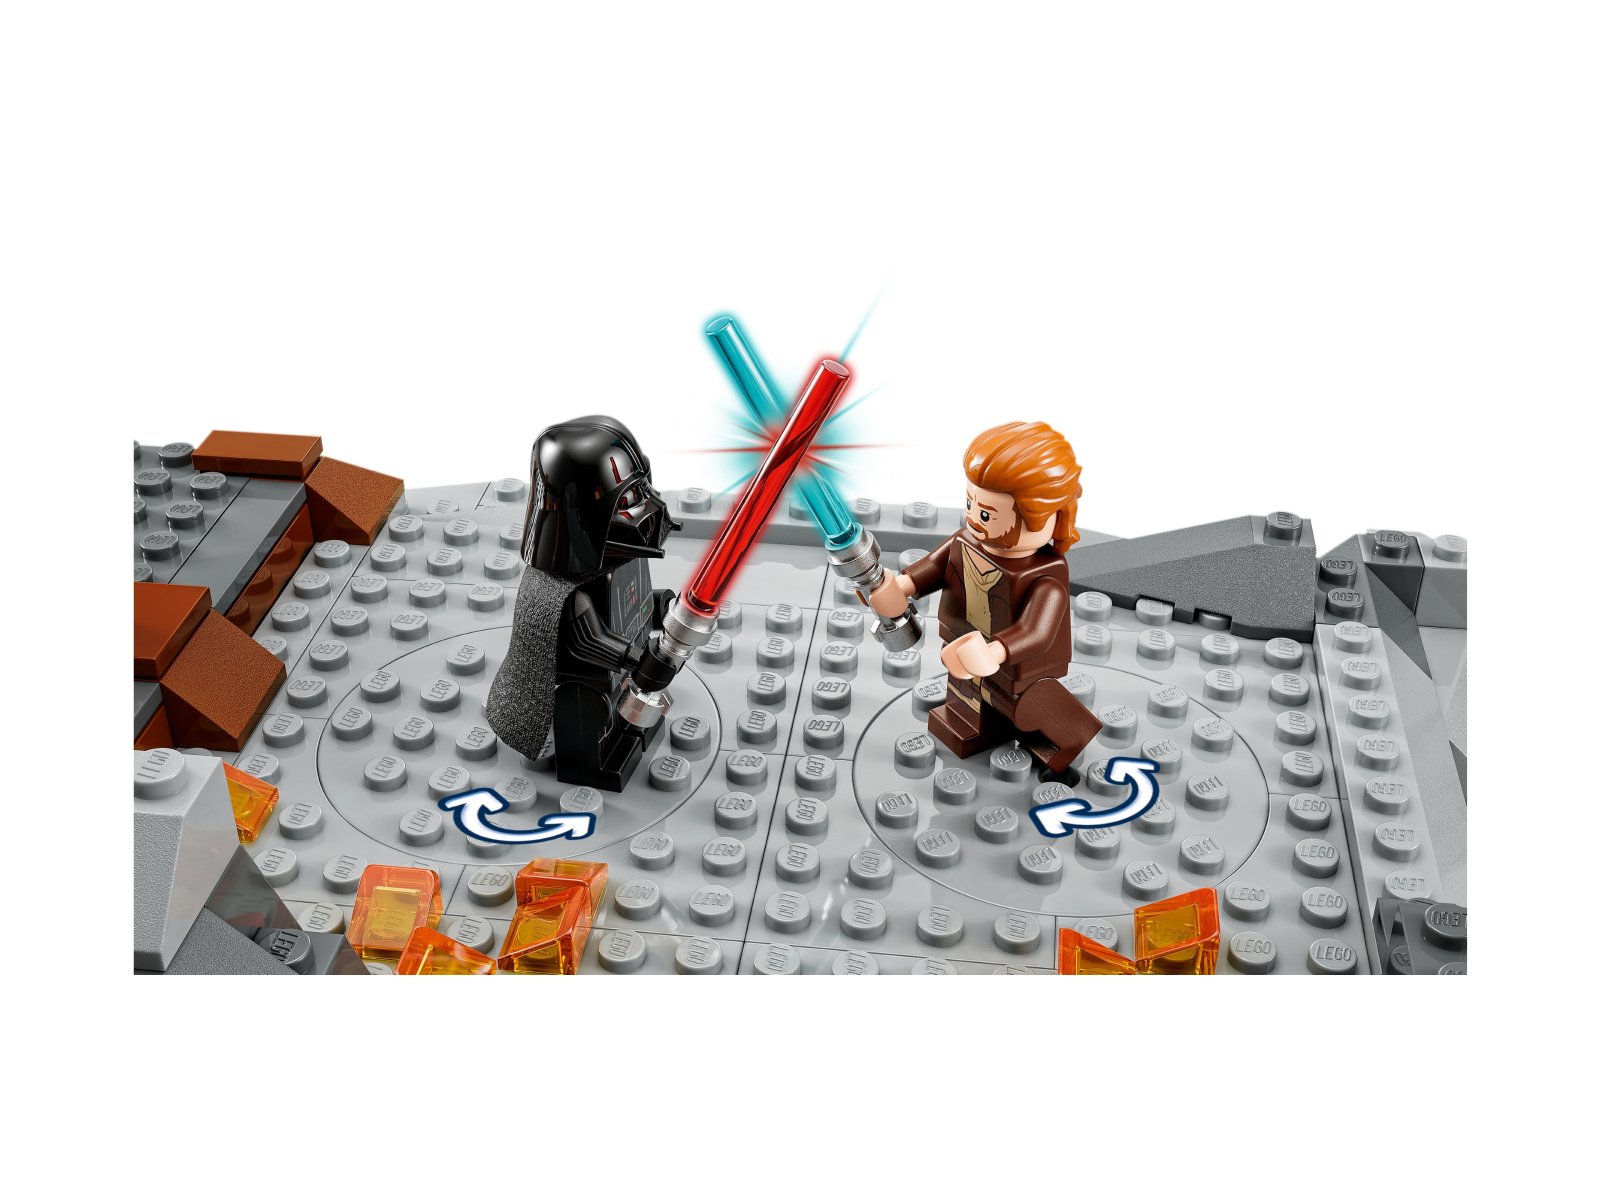 LEGO Star Wars Obi-Wan Kenobi™ kontra Darth Vader™ 75334